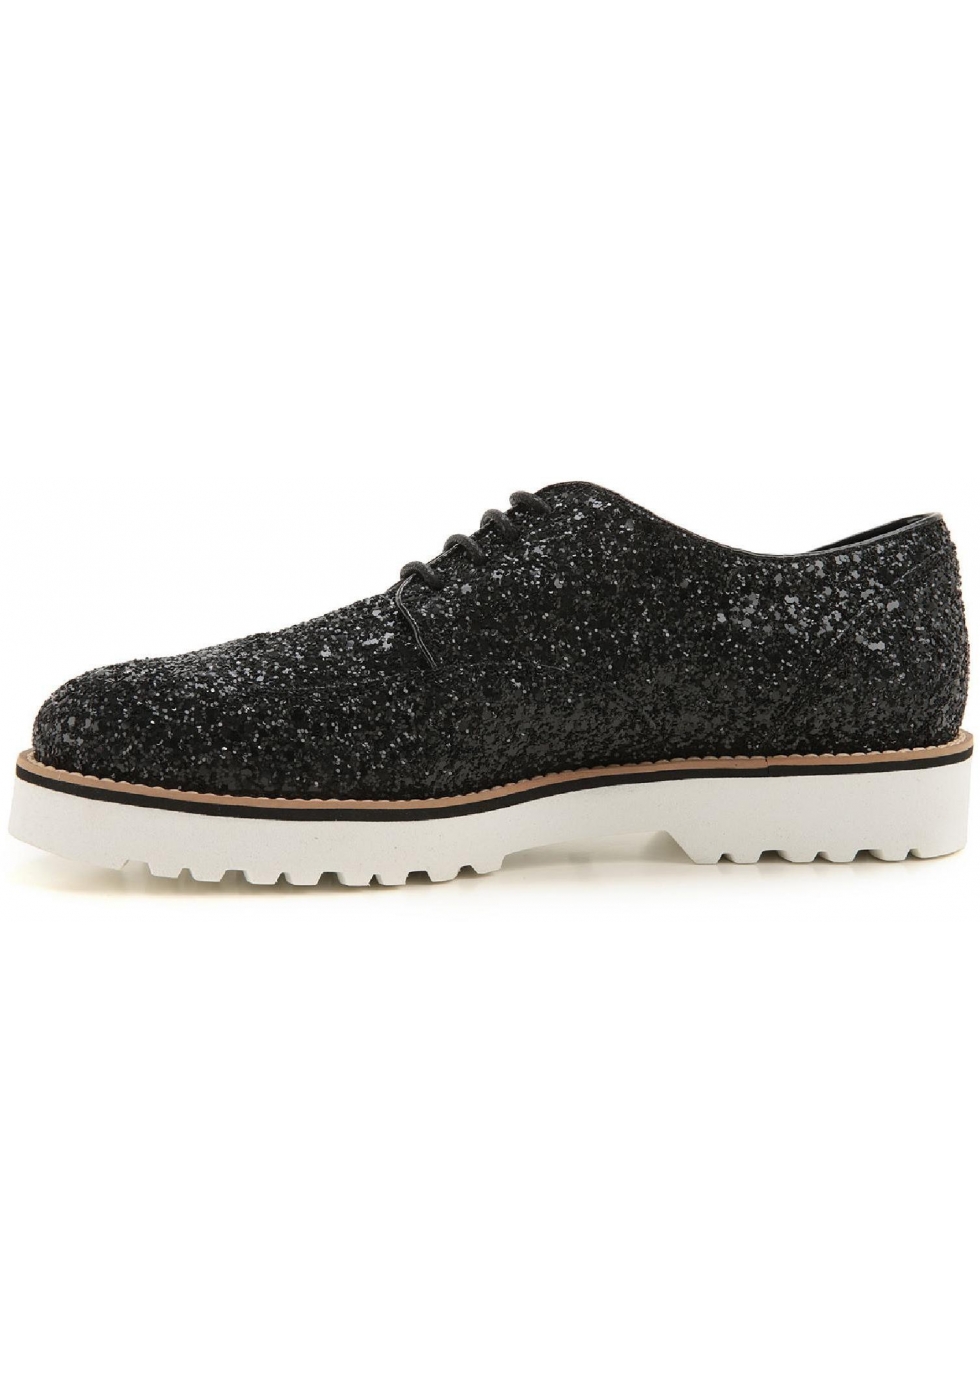 Hogan women's lace-ups shoes in black glitter leather - Italian Boutique